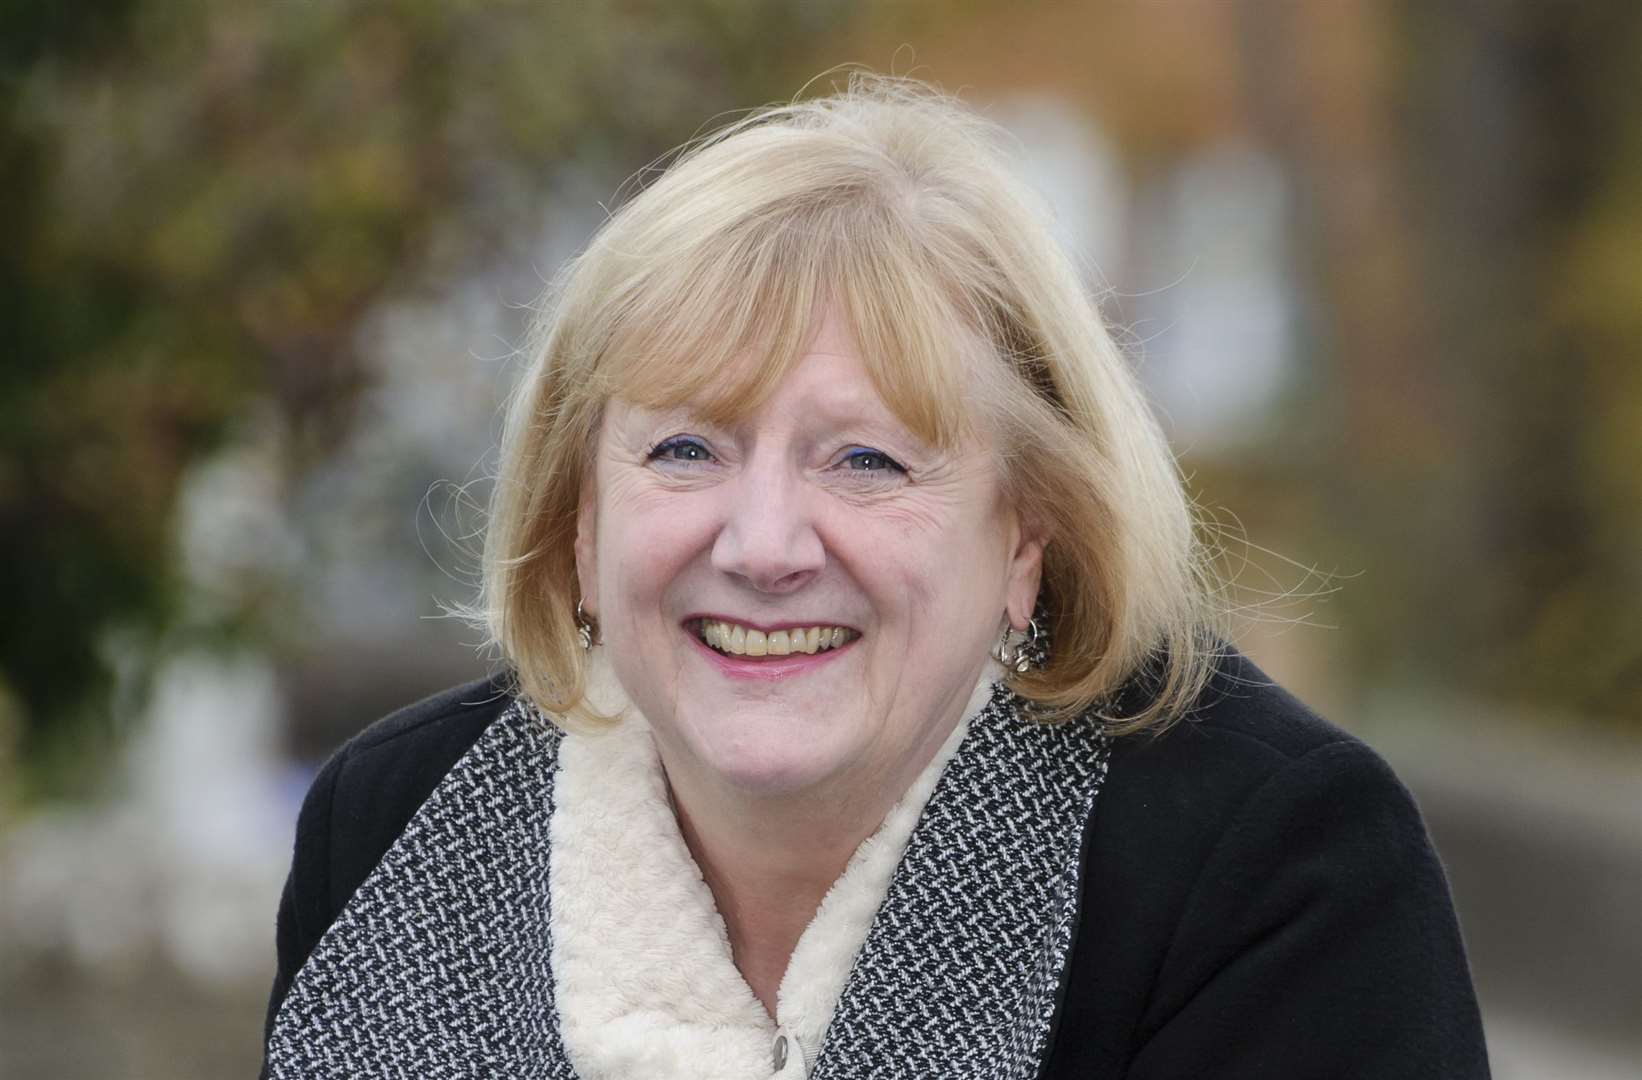 Chairman of Yalding Parish Council, Geraldine Brown